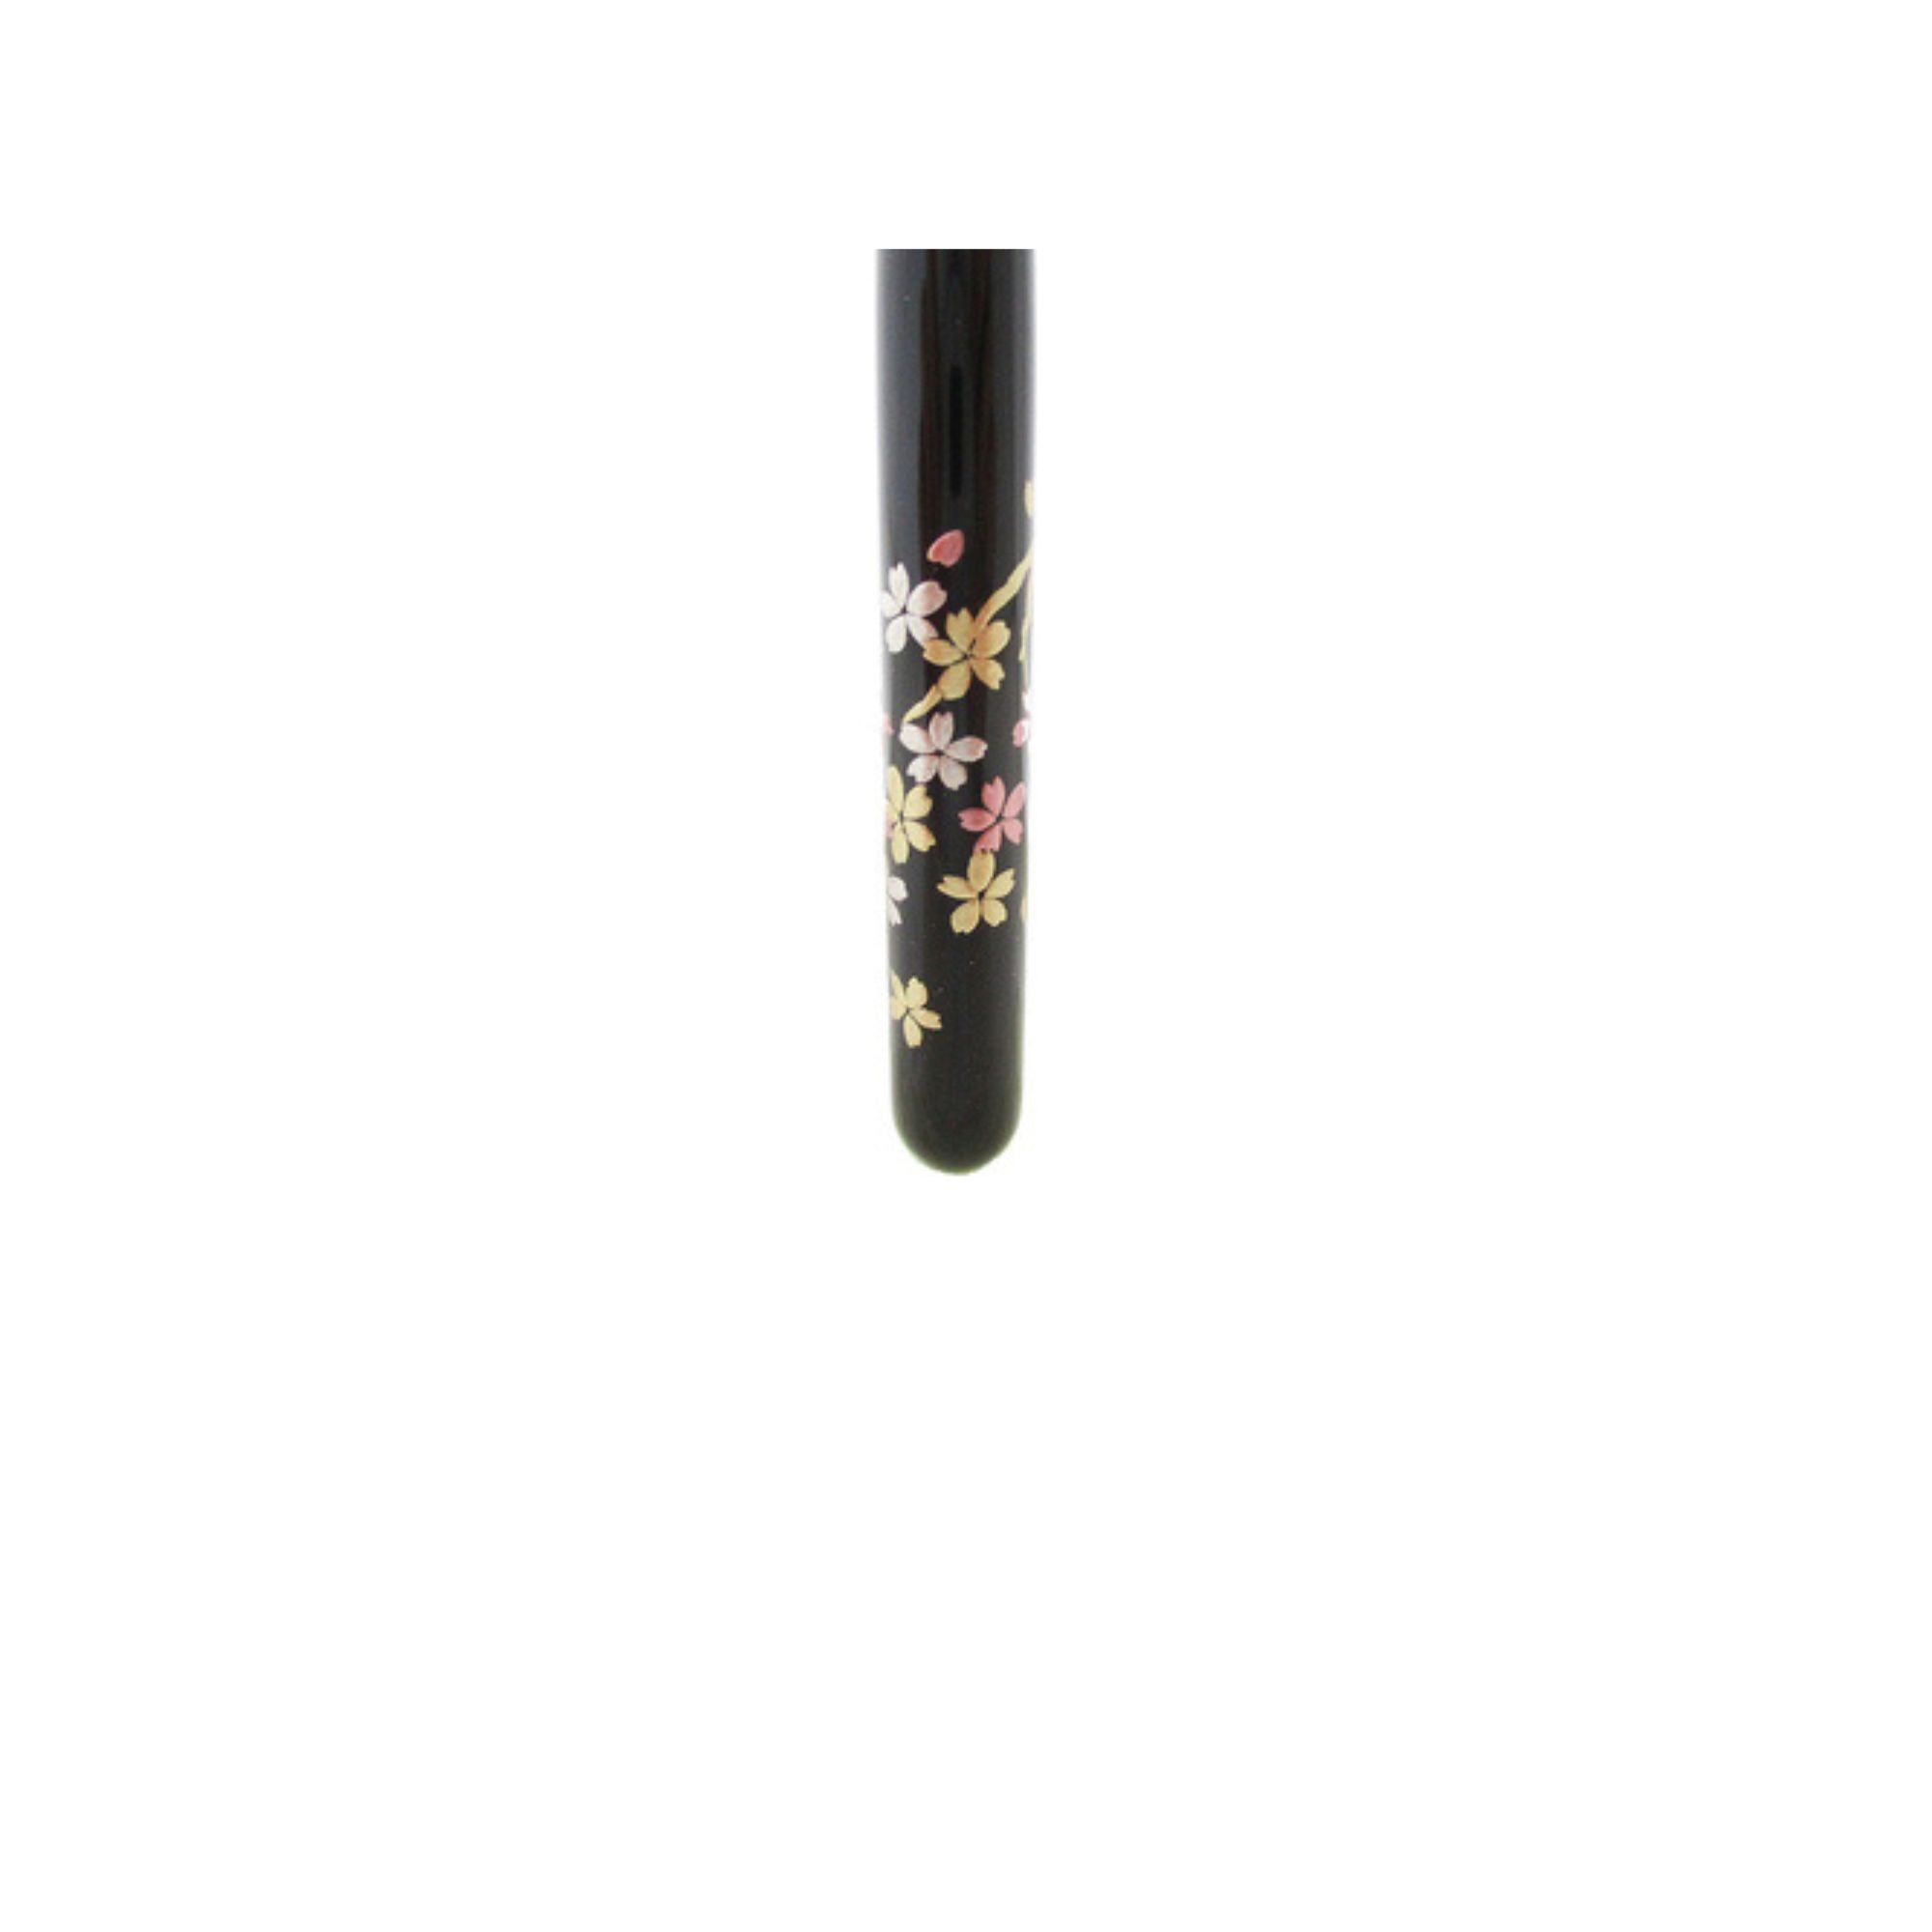 Eihodo Makie Blending Brush Sakura 小桜 – Red, Black Handles (Limited) - Fude Beauty, Japanese Makeup Brushes